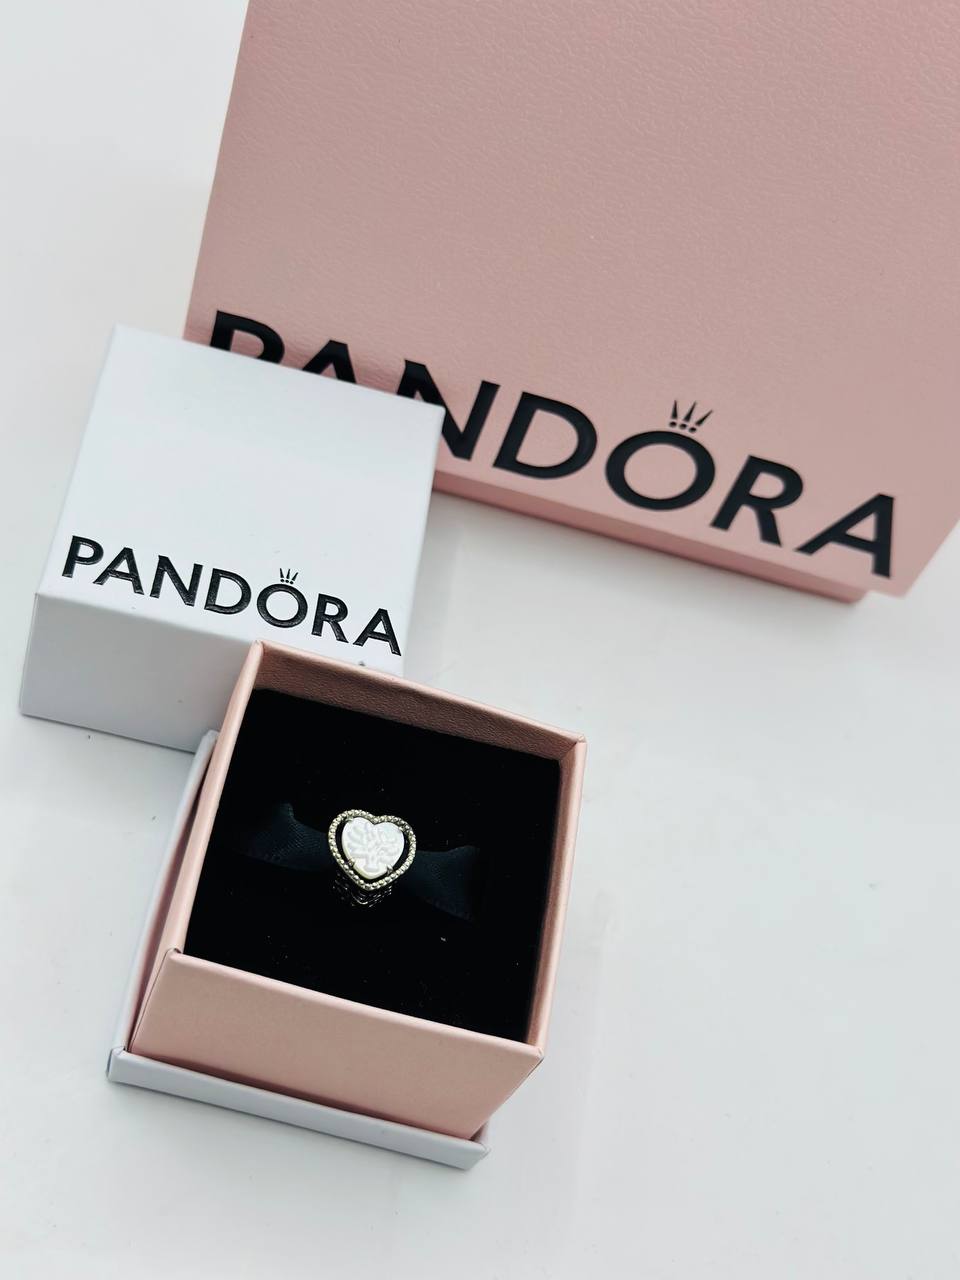 Pandora charm